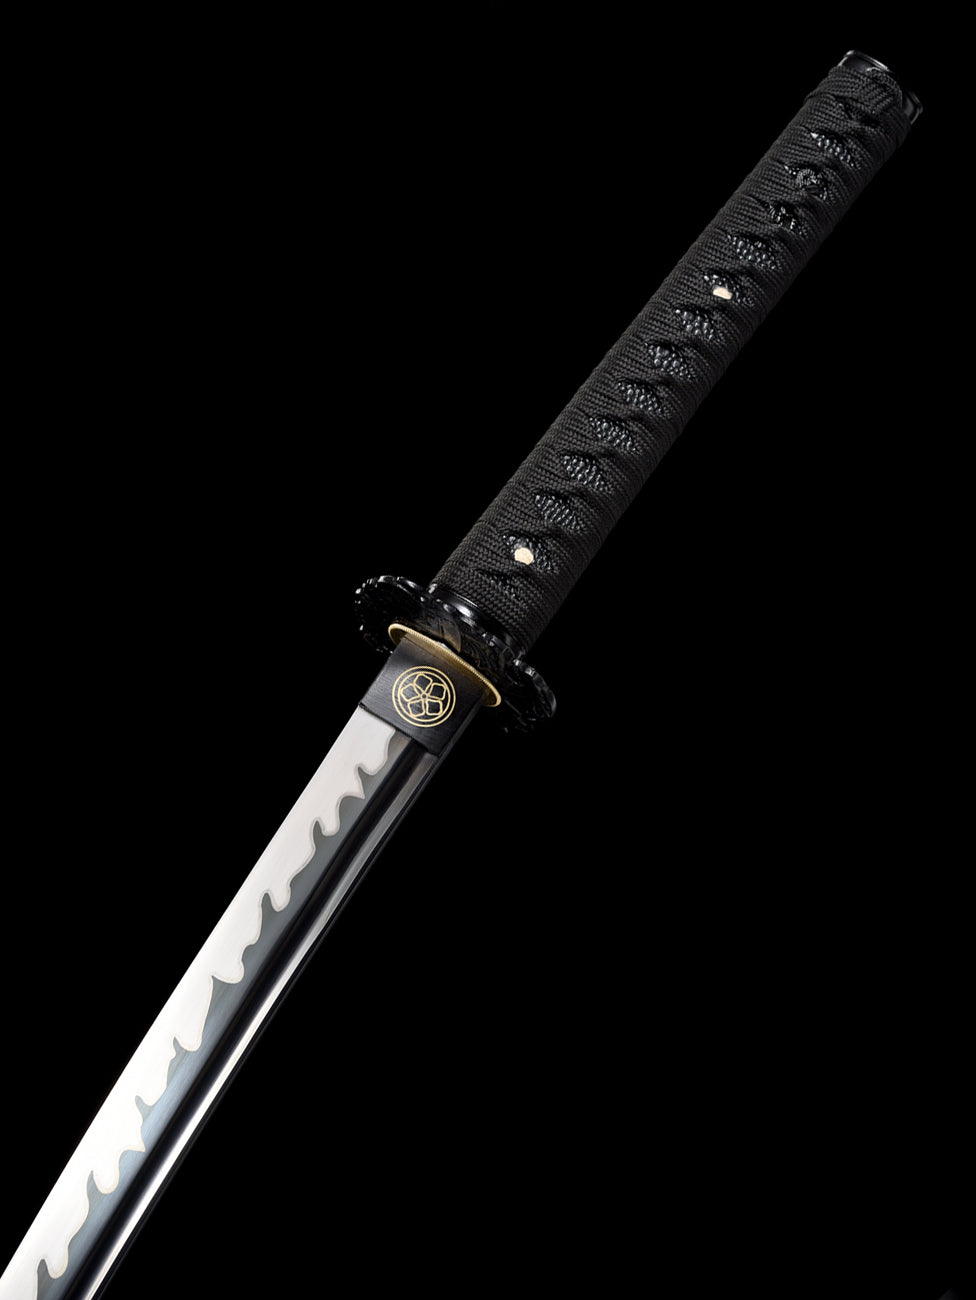 Samurai ghost katana Japanese sword 1060steel nigrescence